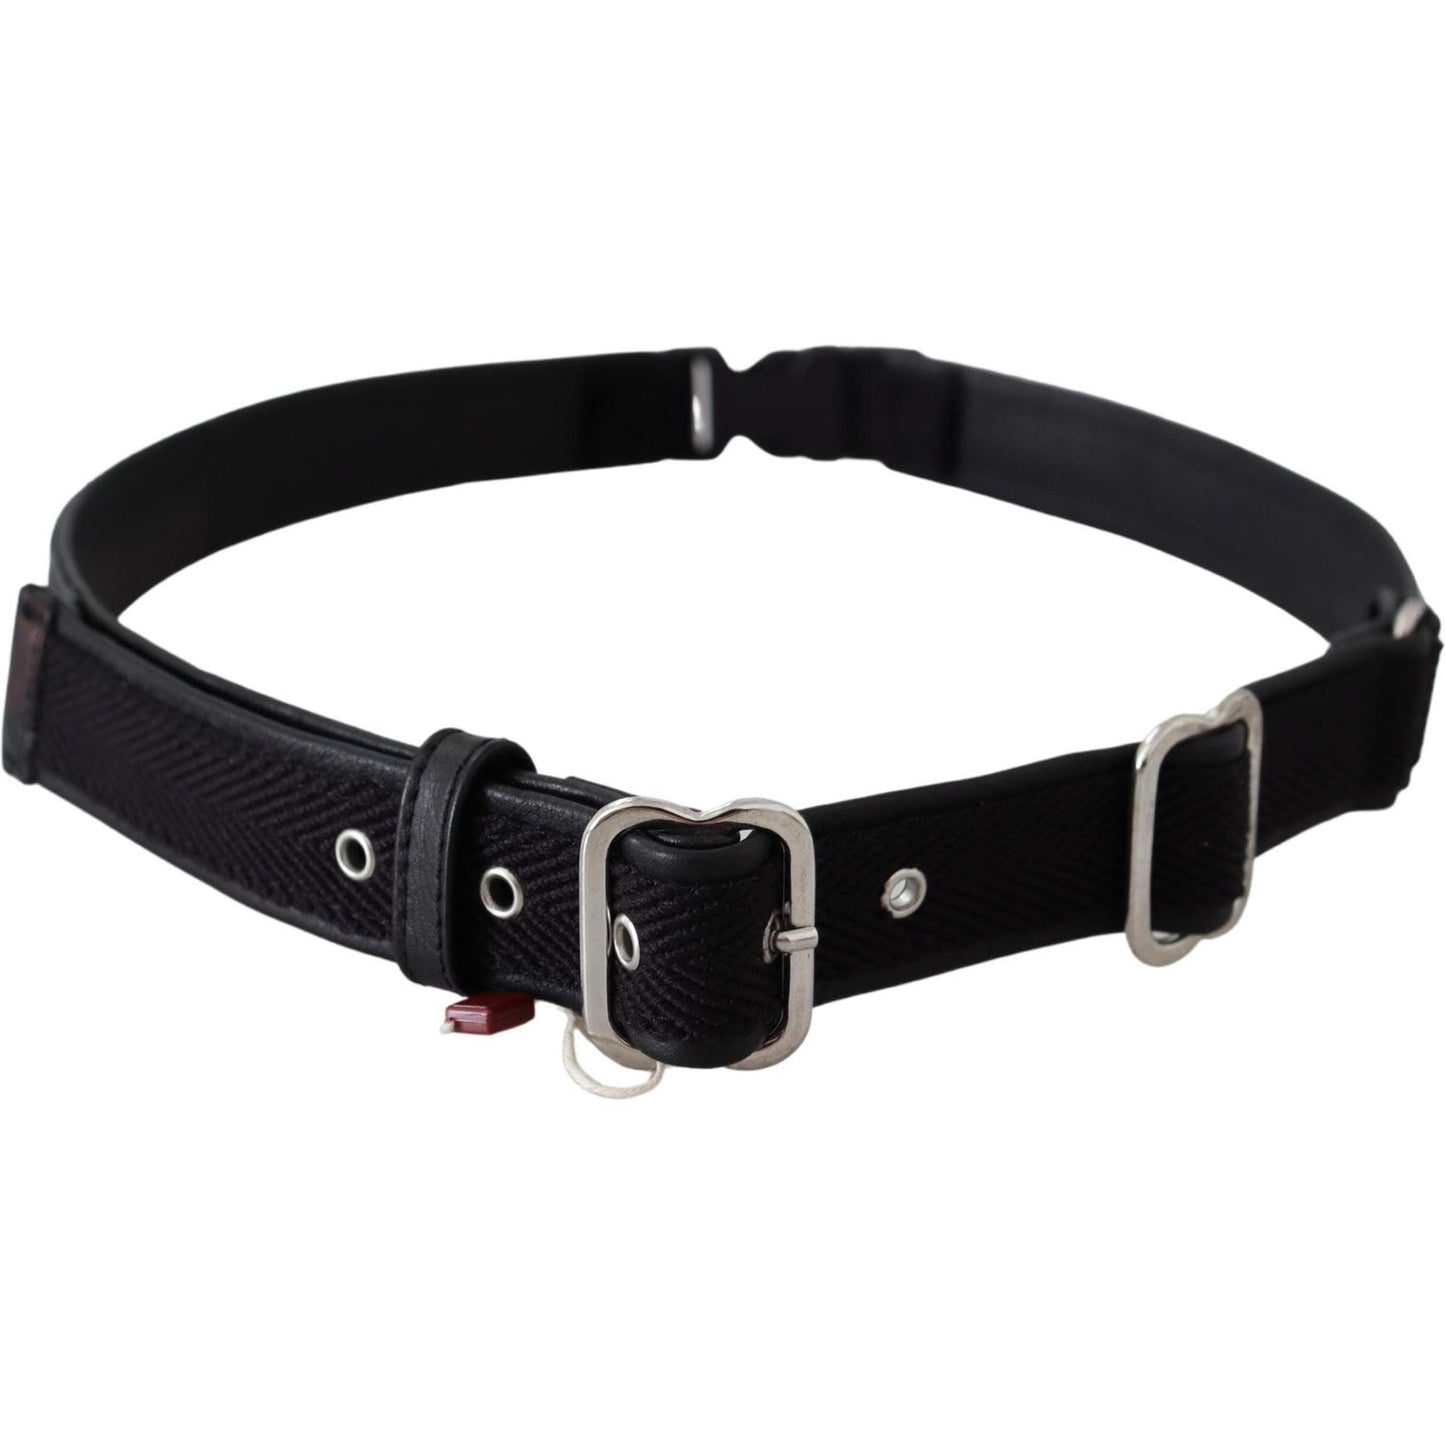 GF Ferre Chic Black Leather Waist Belt with Chrome Buckle Belt black-leather-silver-chrome-metal-buckle-belt